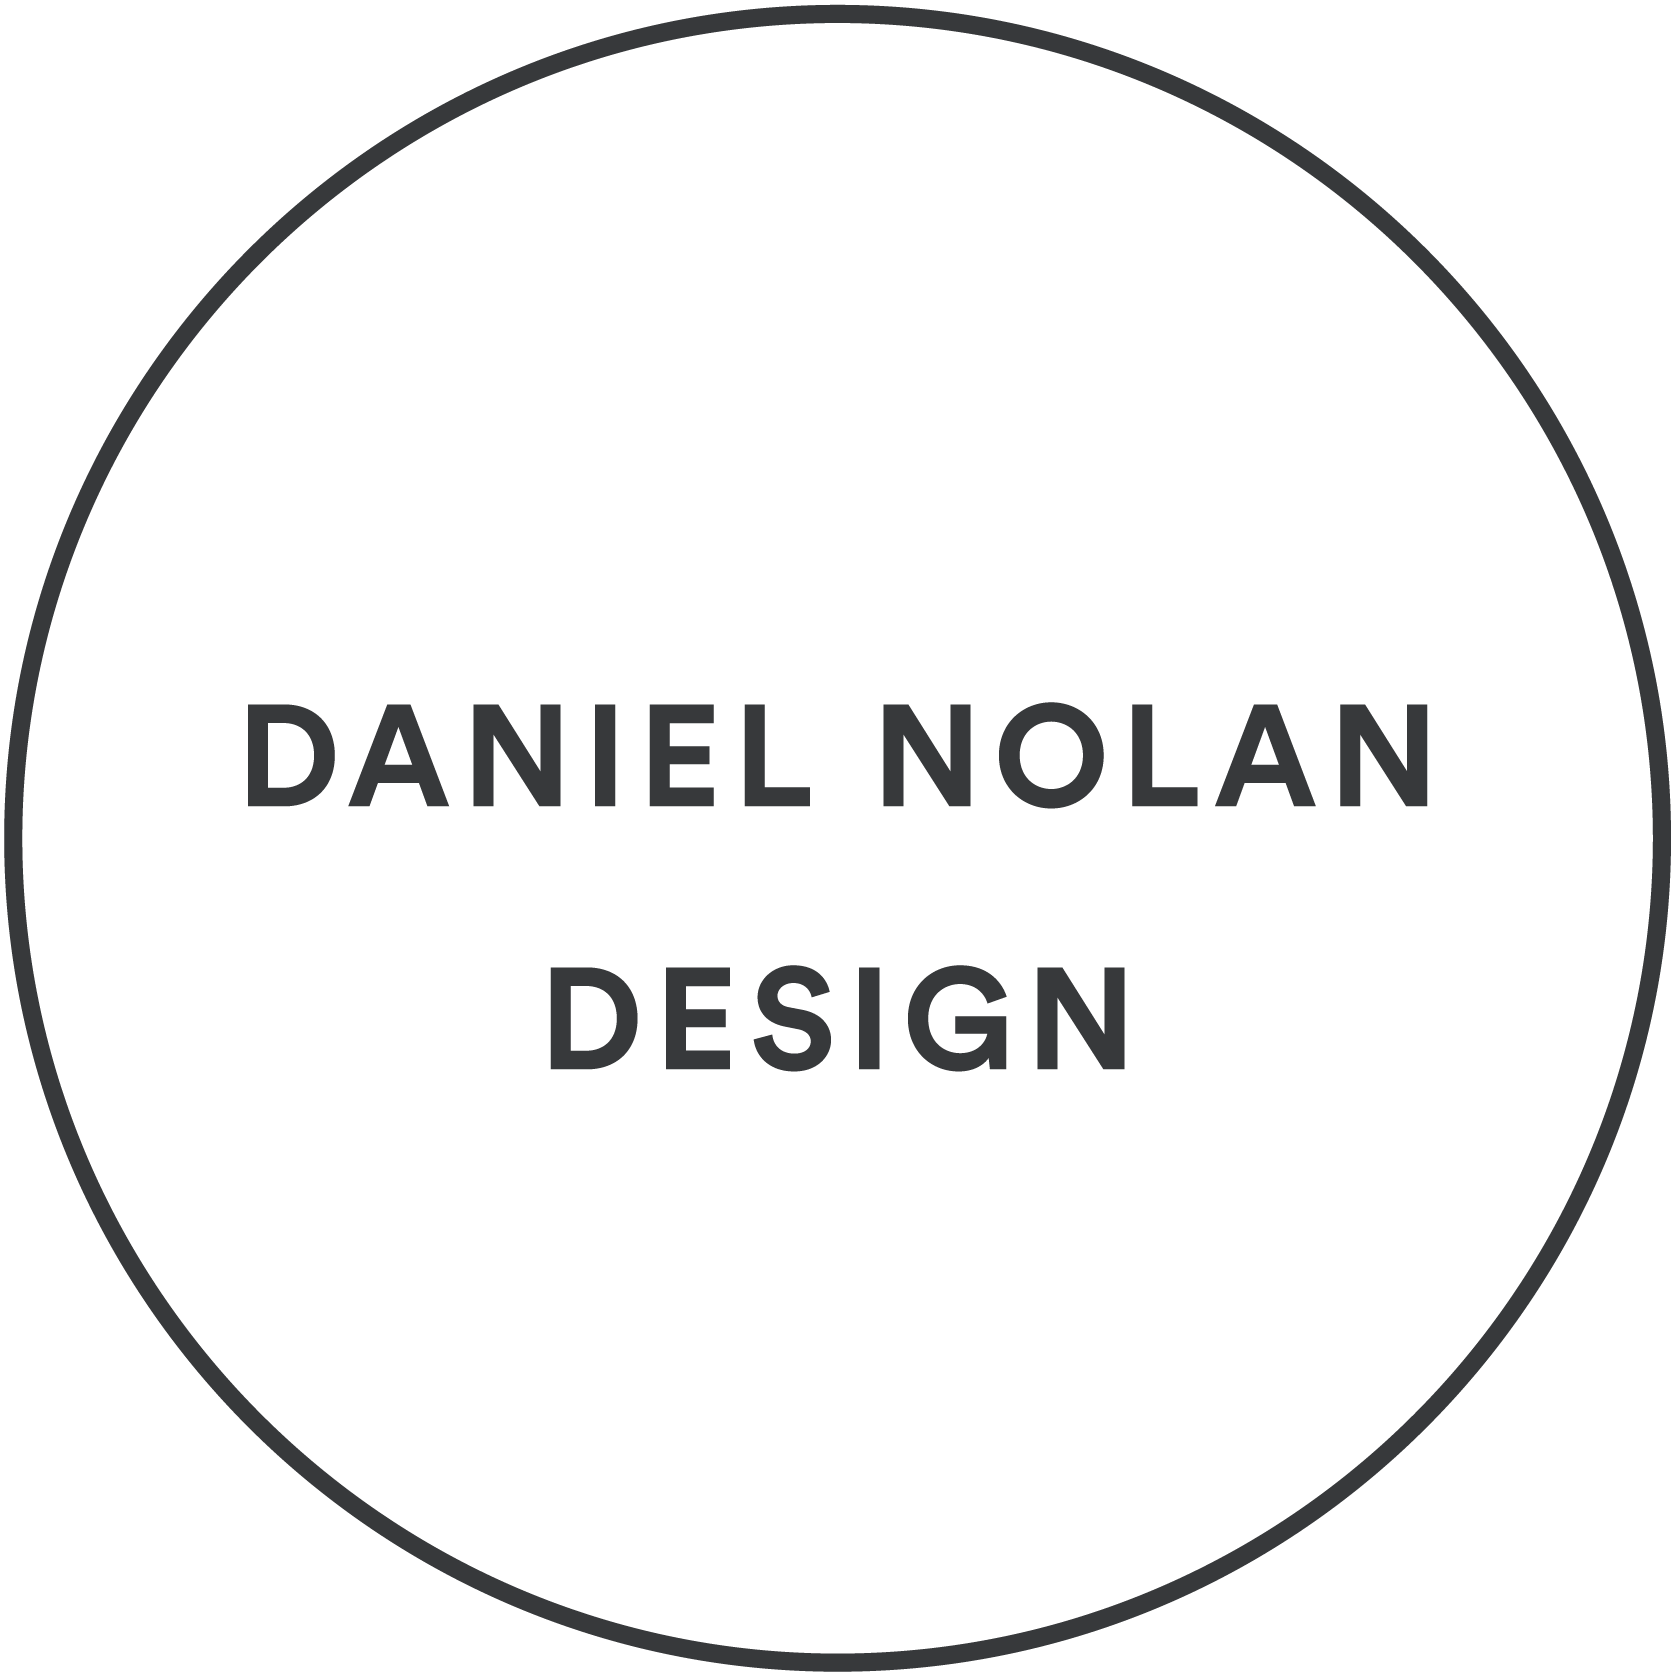 Daniel Nolan Design